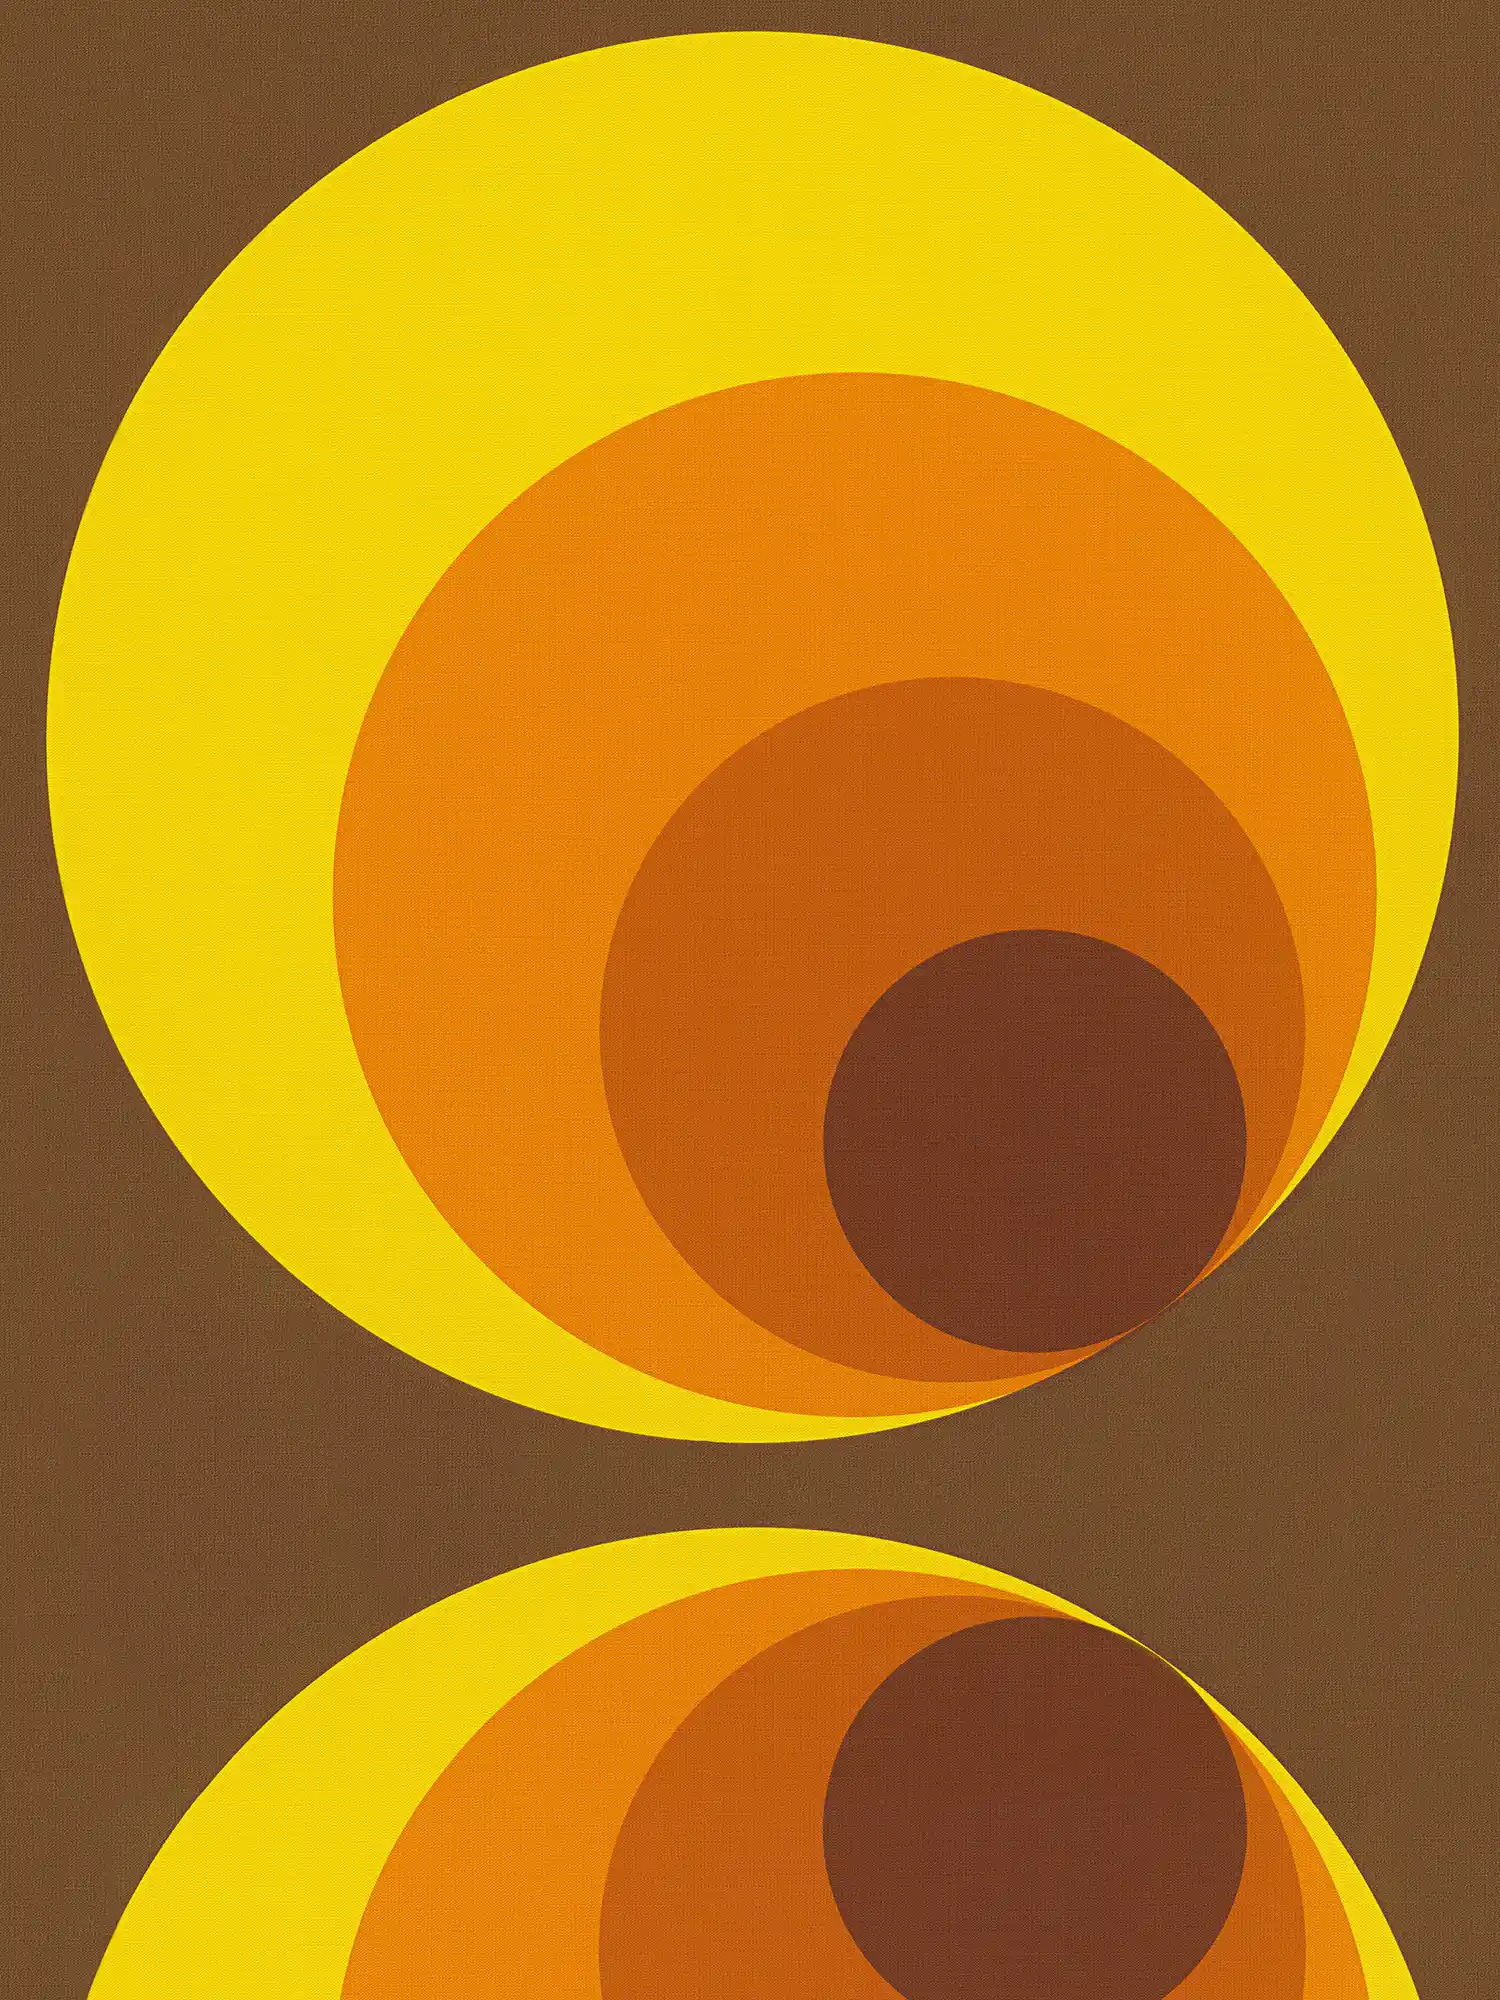 Vintage wallpaper with retro design - brown, yellow, orange
